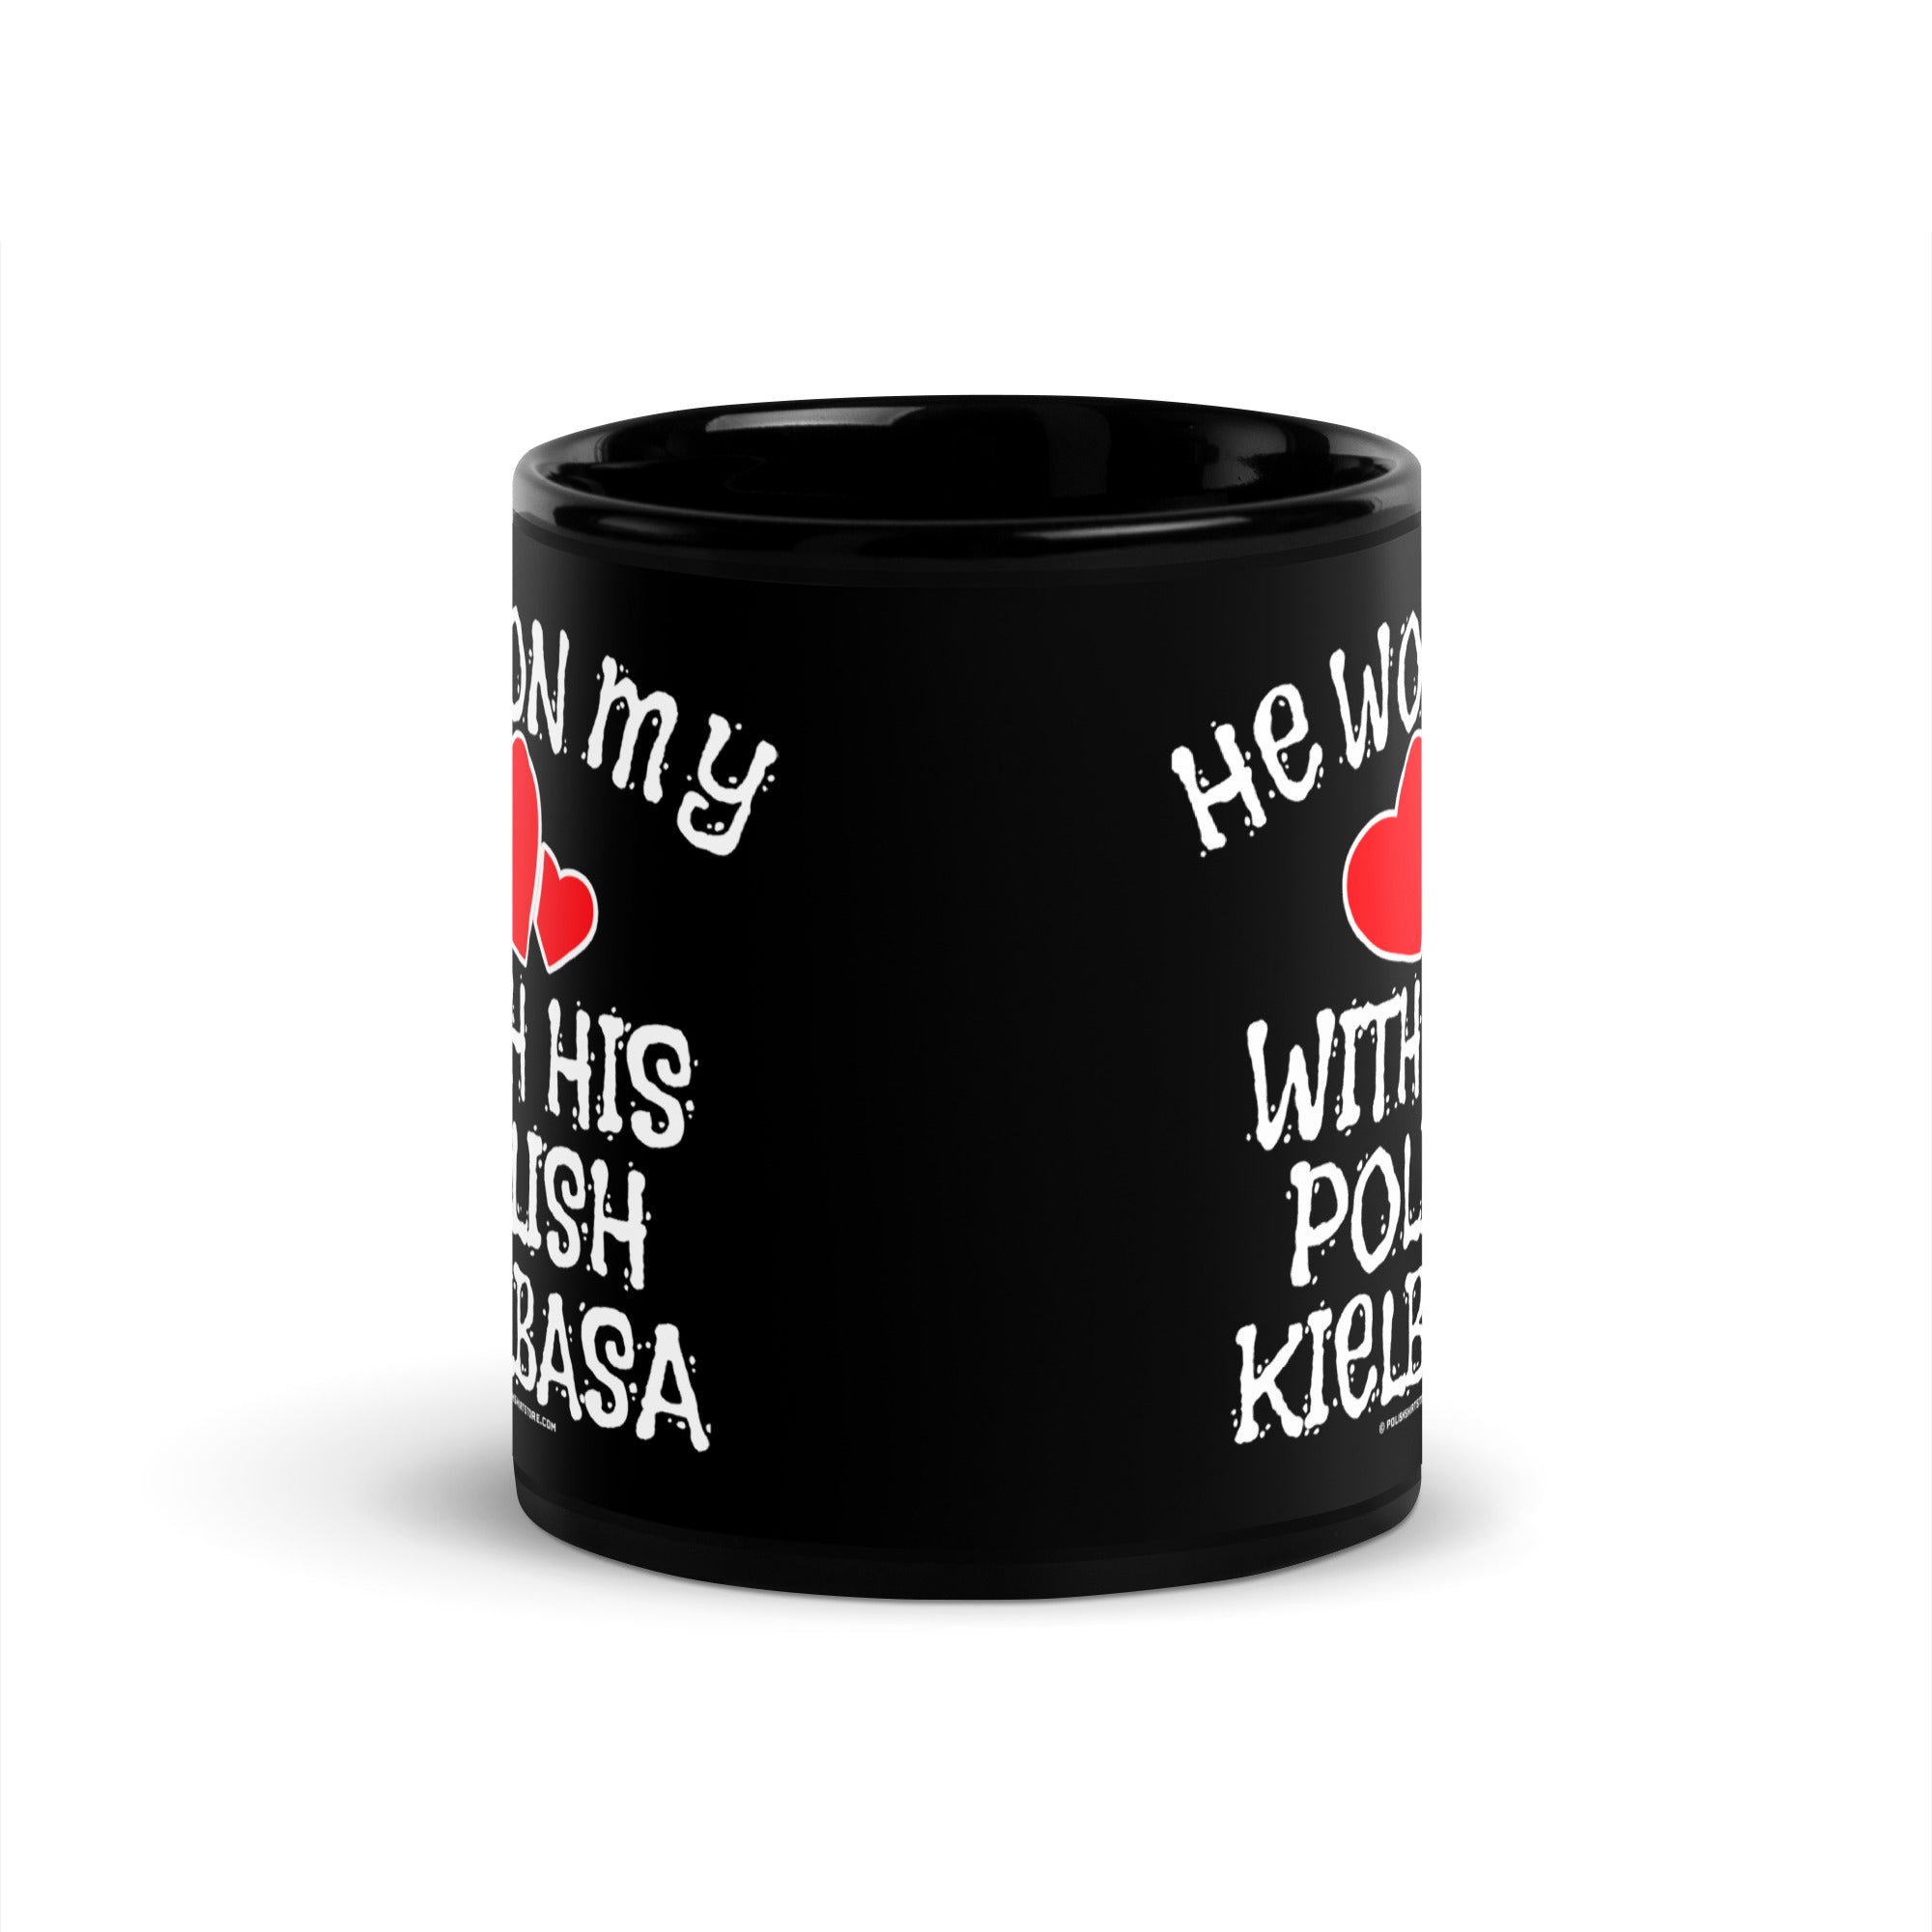 He Won My Heart With His Polish Kielbasa Black Glossy Mug  Polish Shirt Store   